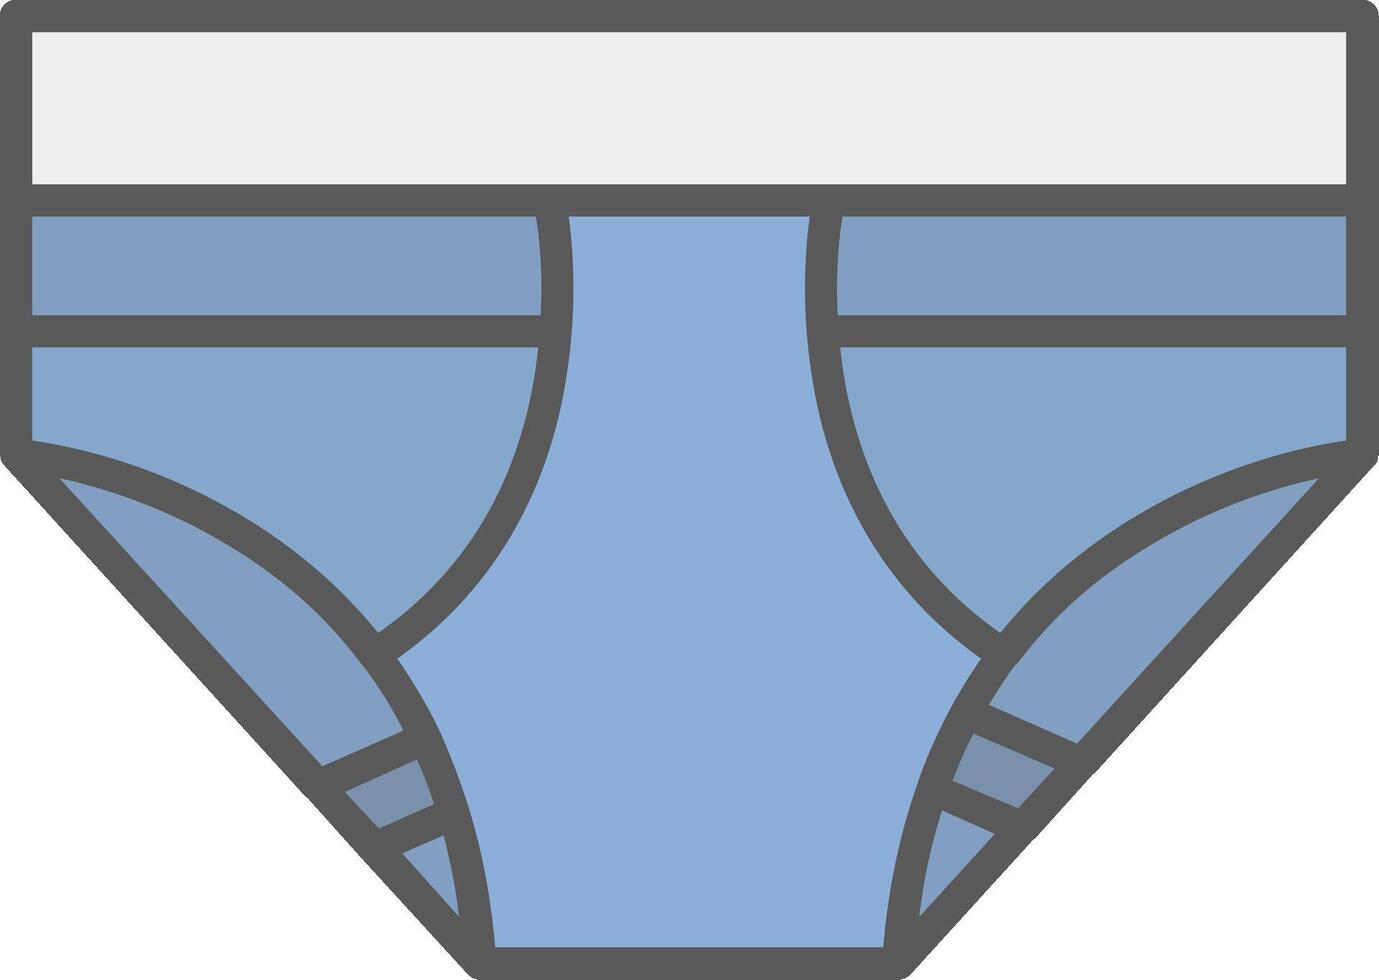 Underwear Line Filled Light Icon vector